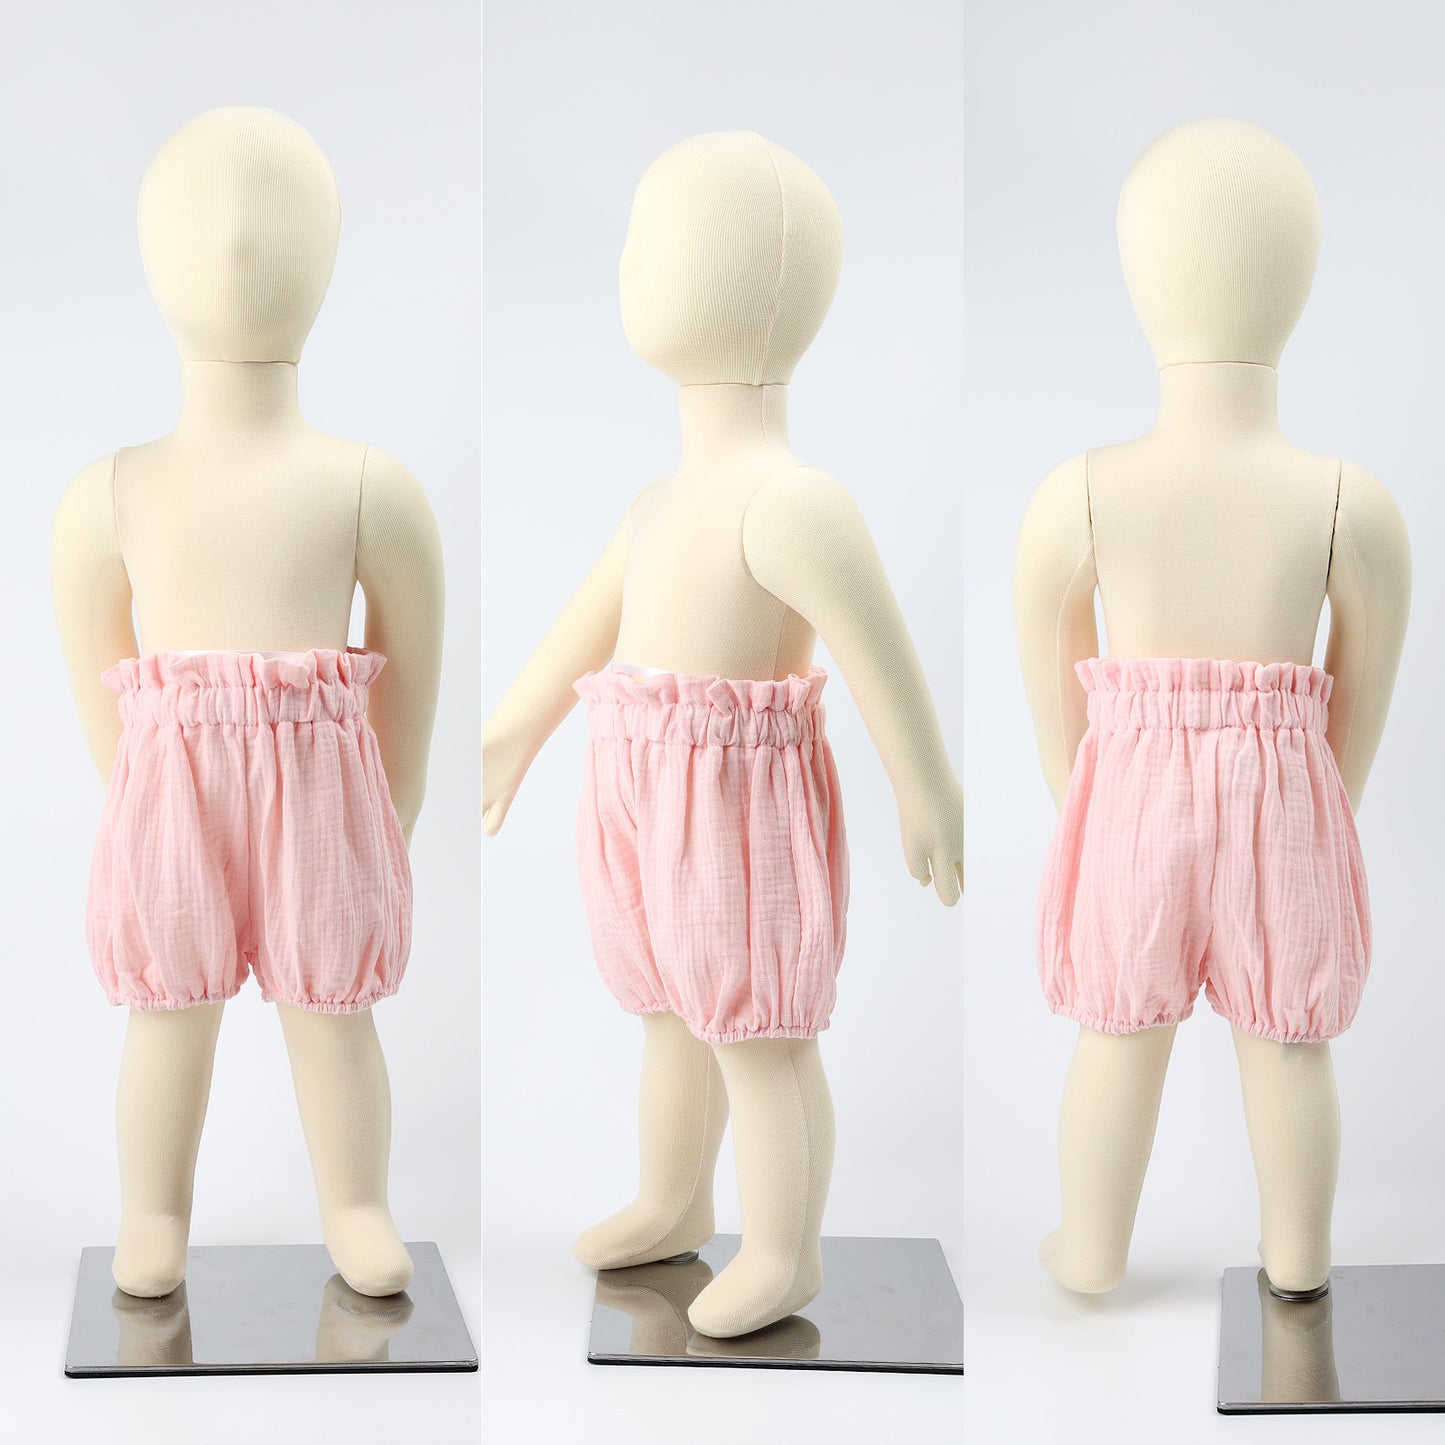 Baby Girls Infant Toddler Cotton Gauze Bloomer Shorts